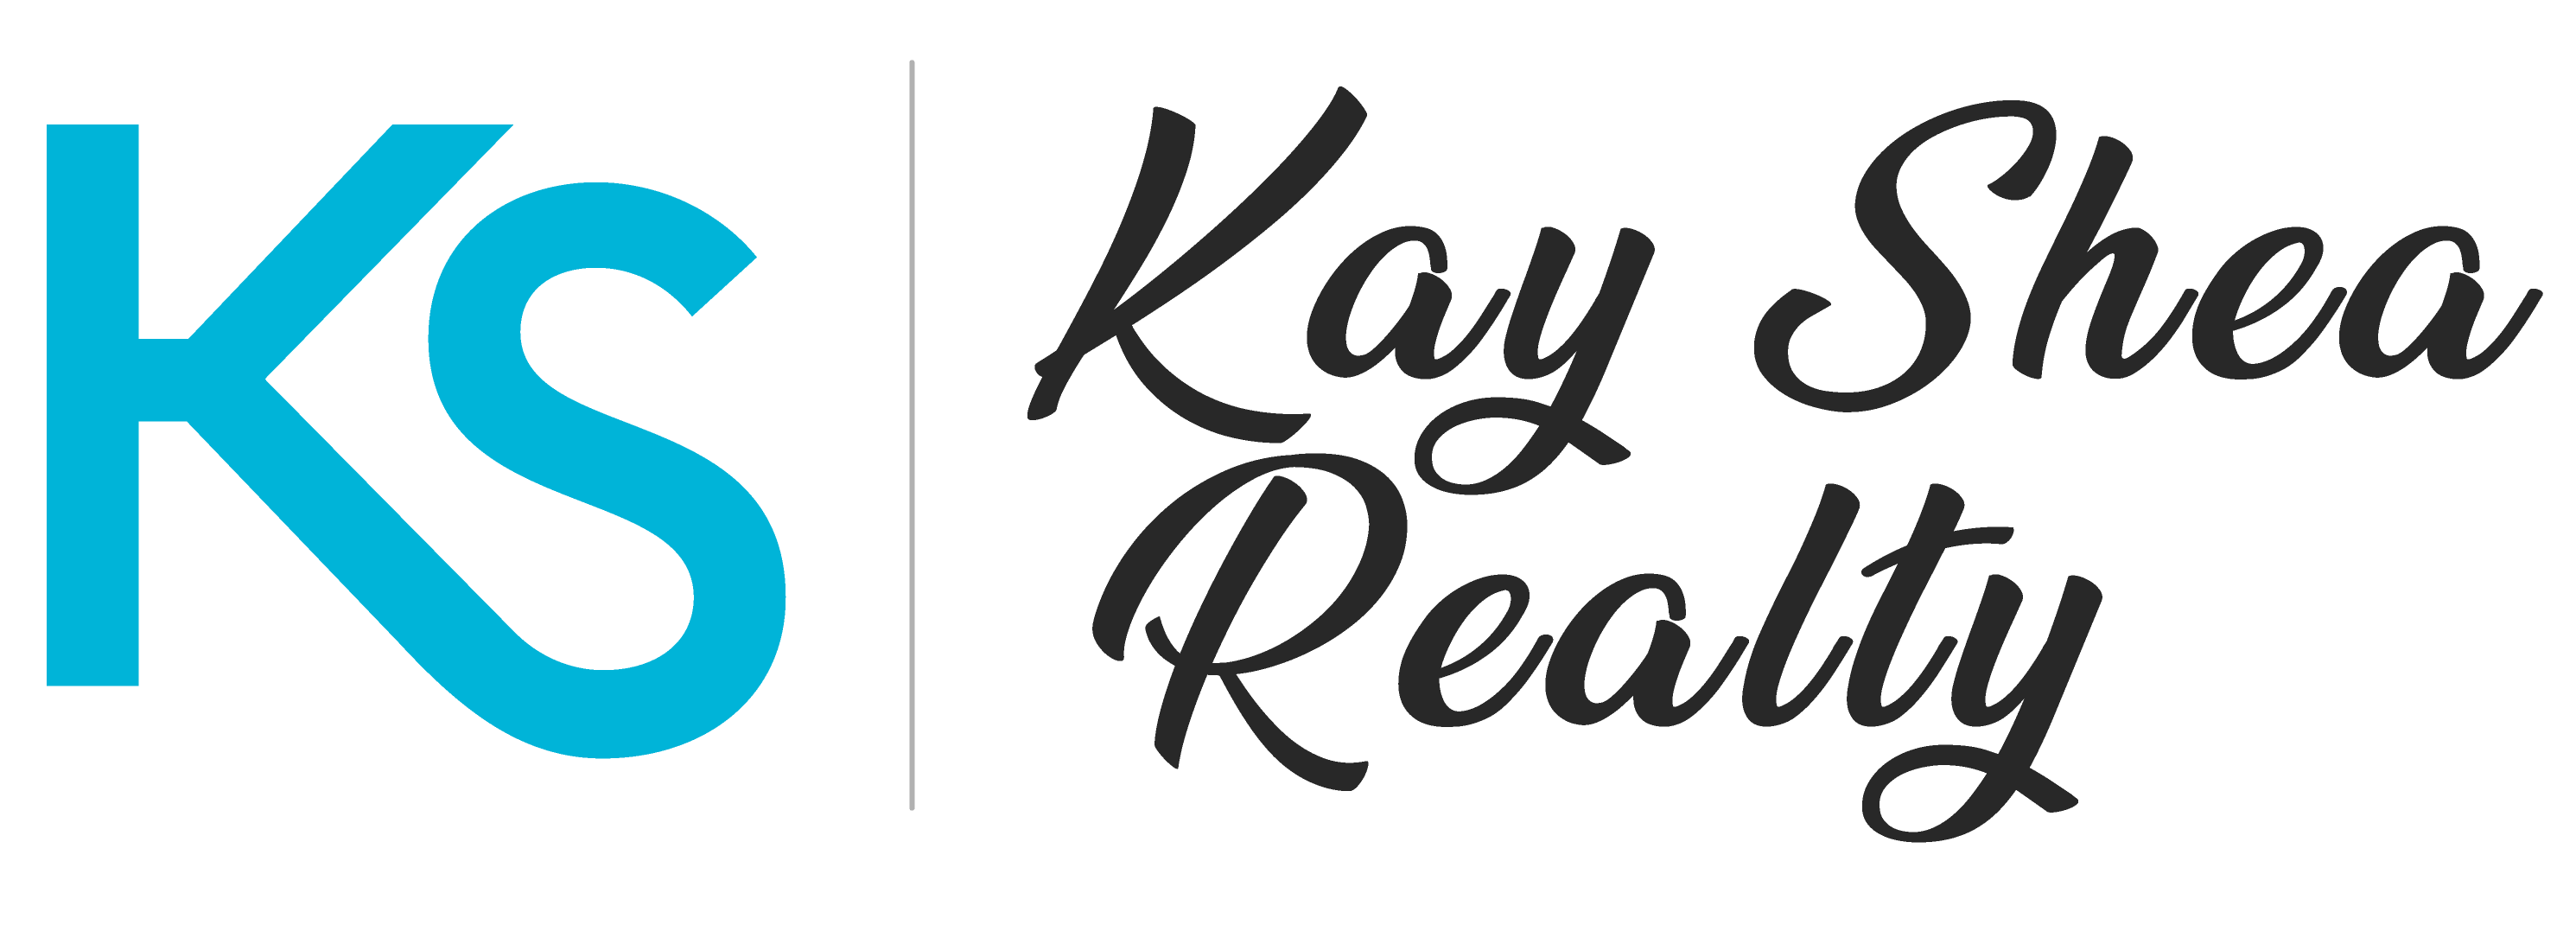 Sold Properties – Kay Shea – Real Estate Professional